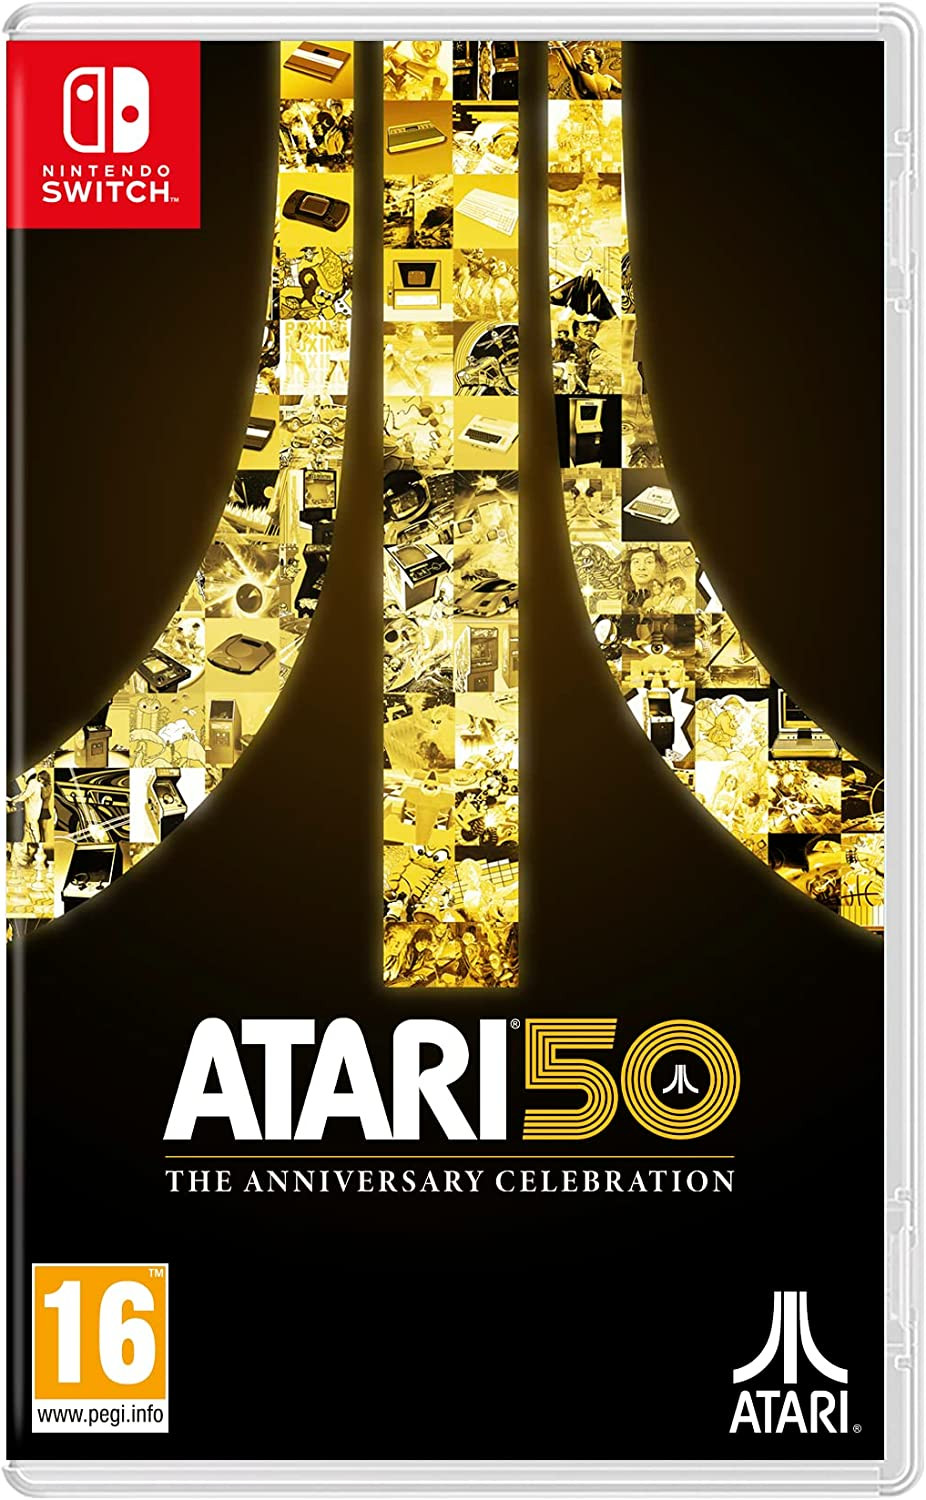 Atari 50 The Anniversary Celebration - Nintendo Switch